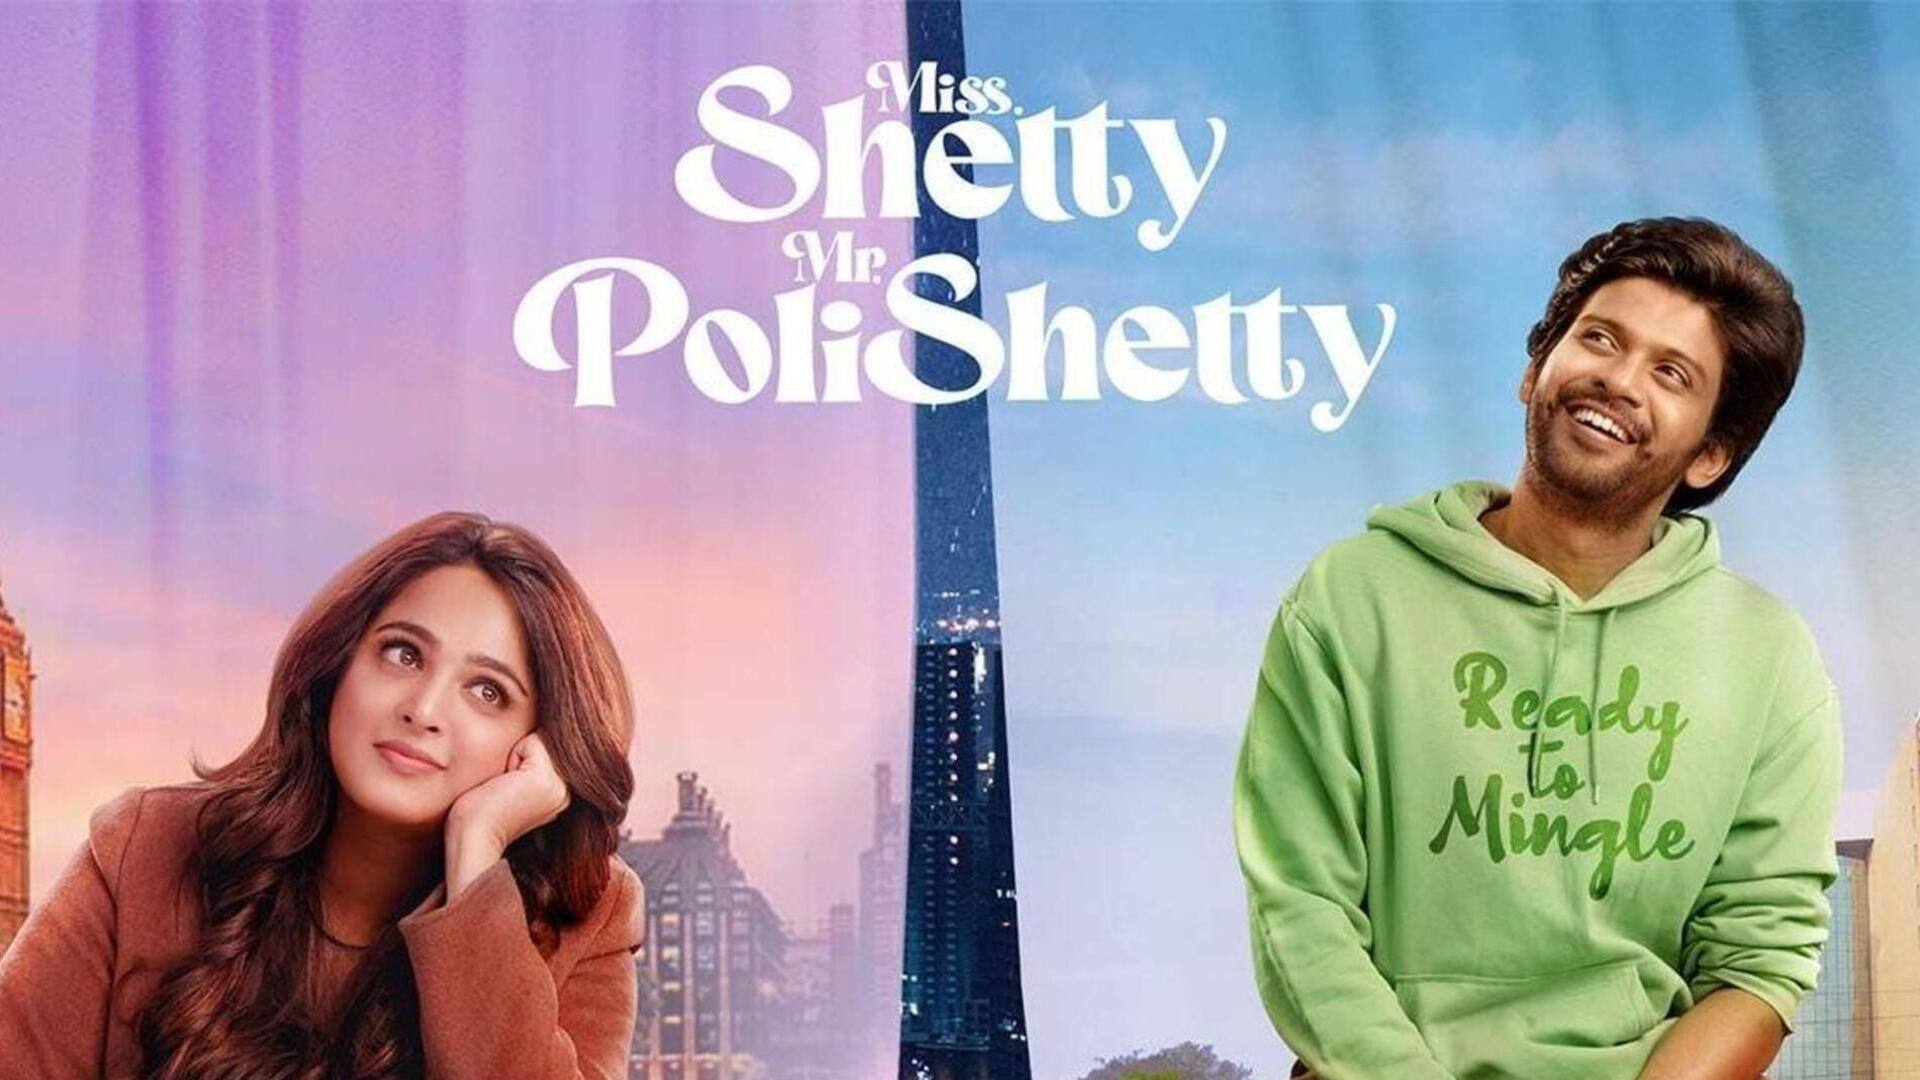 Box office collection: 'Miss Shetty Mr. Polishetty' enables autopilot mode